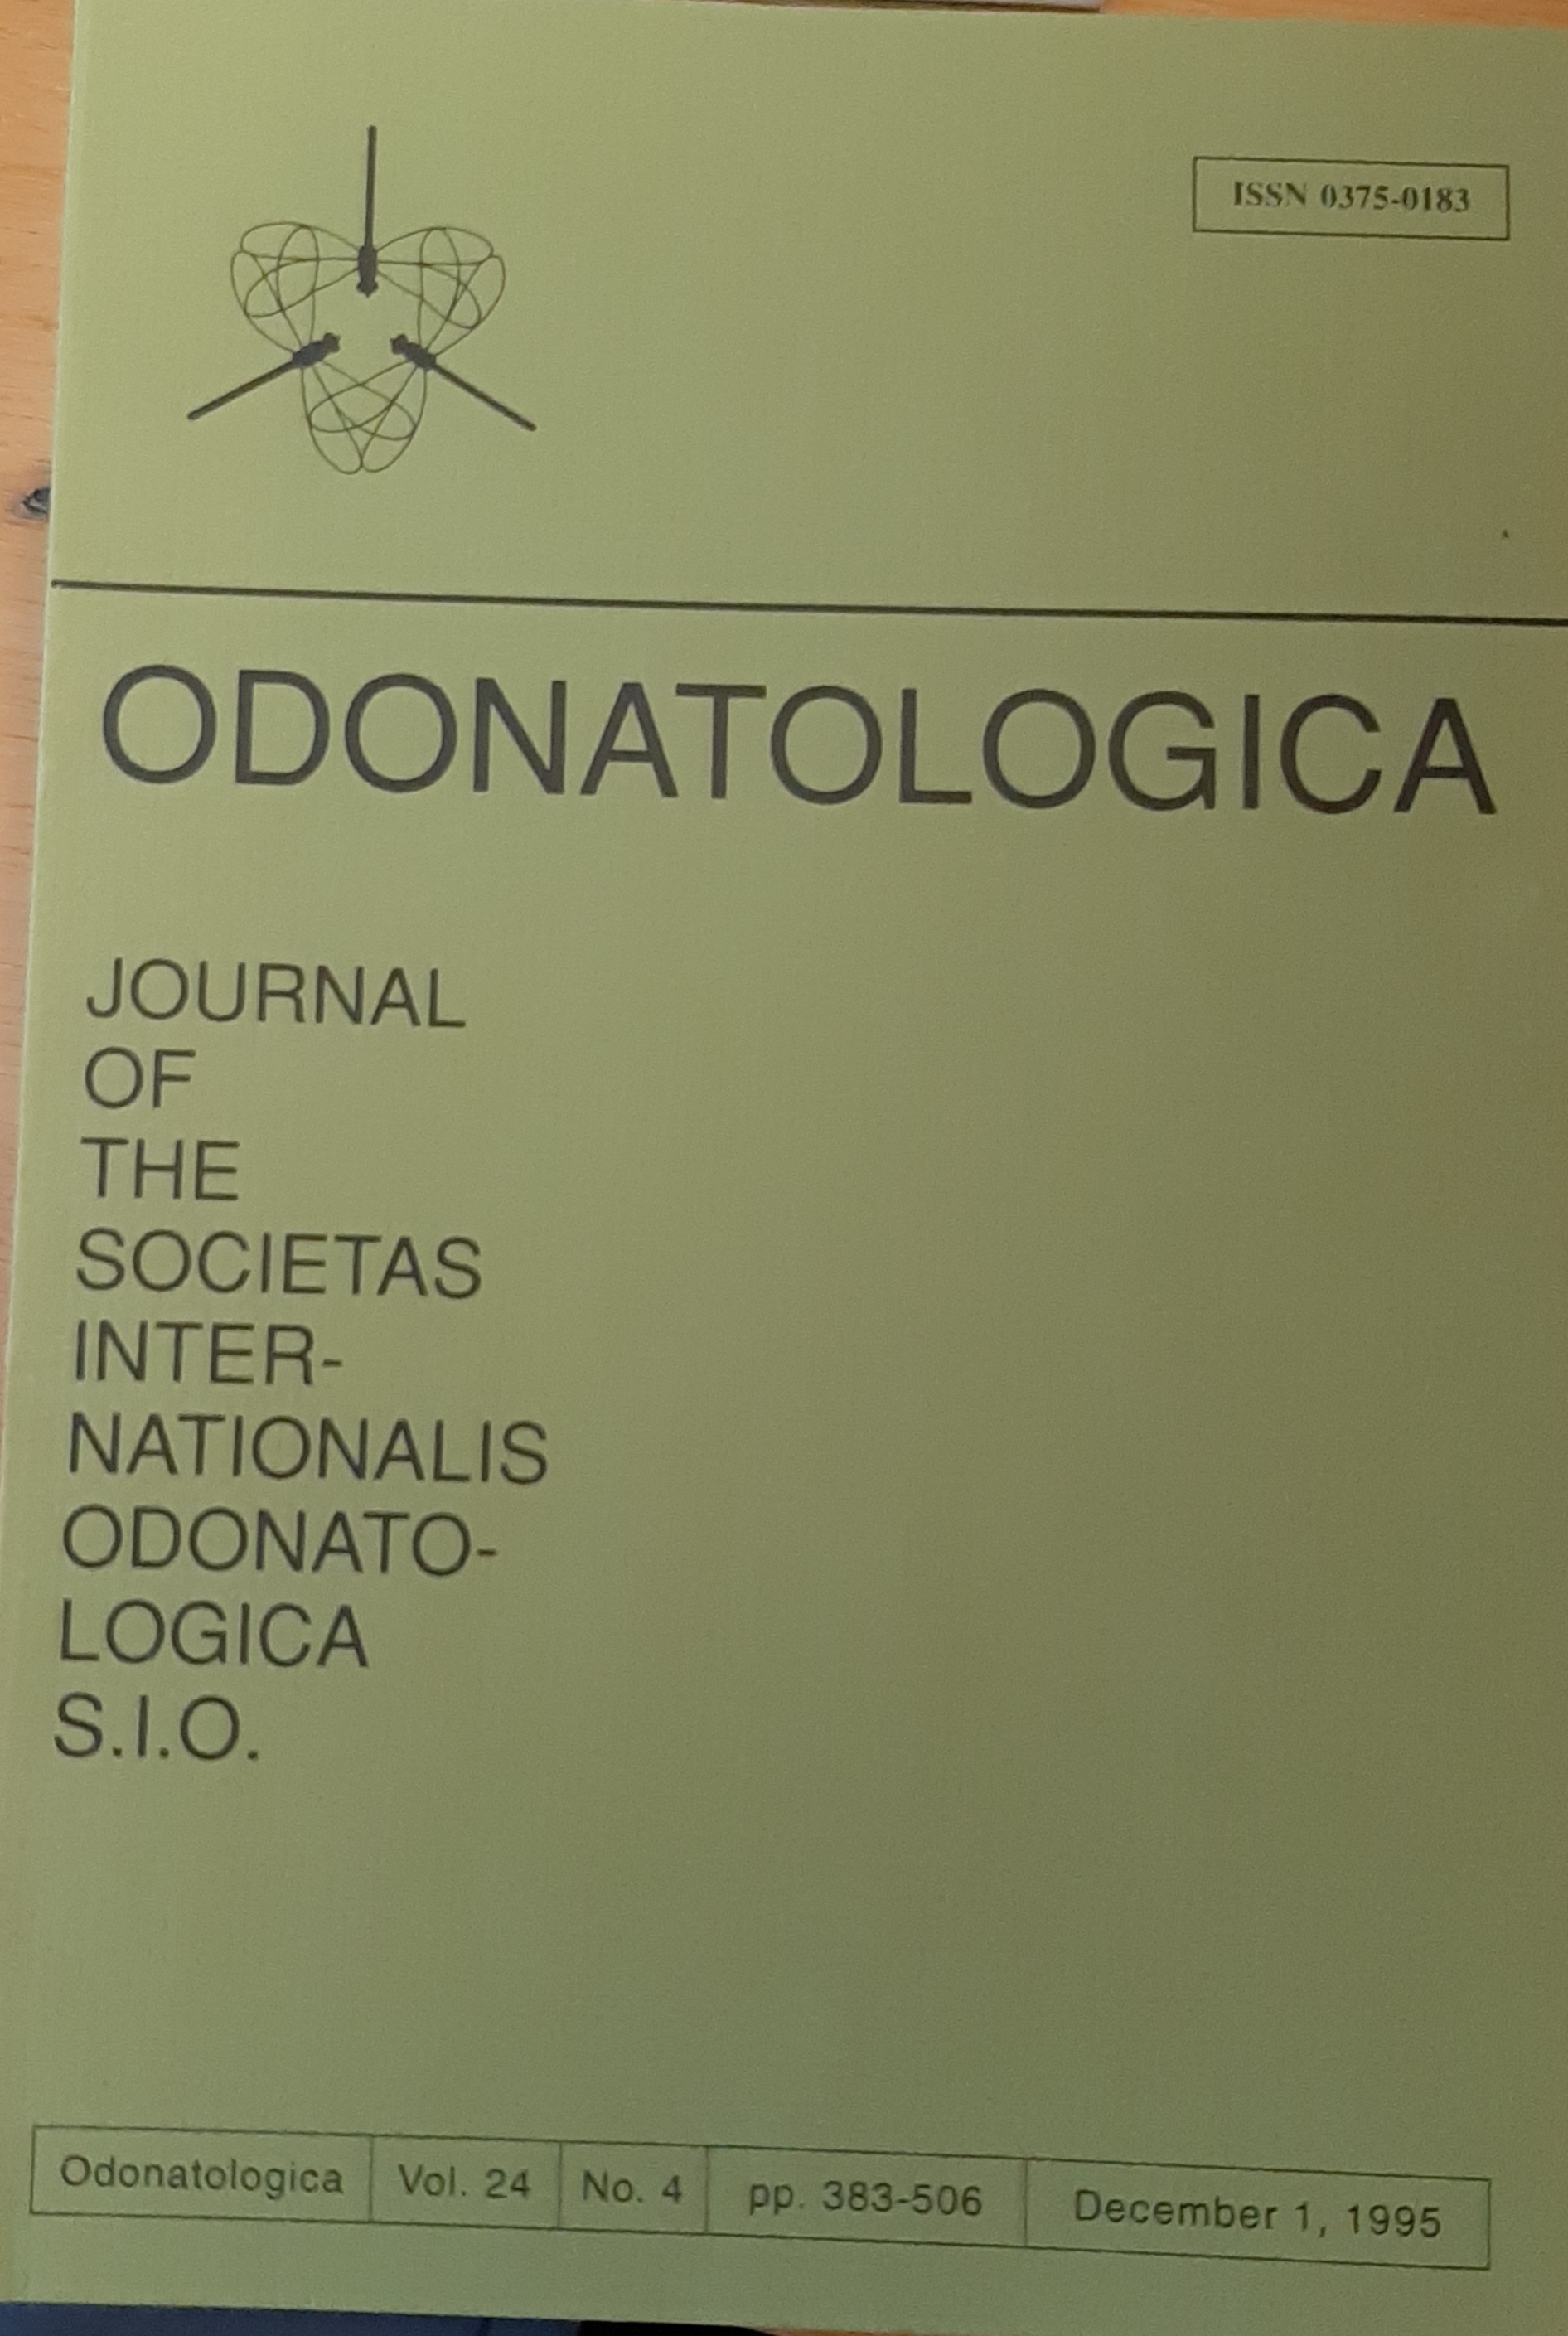 Odonatologica 1995/24. évf. 4. szám Journal of the Societas Internationalis Odonatologica S.I.O. (Rippl-Rónai Múzeum RR-F)